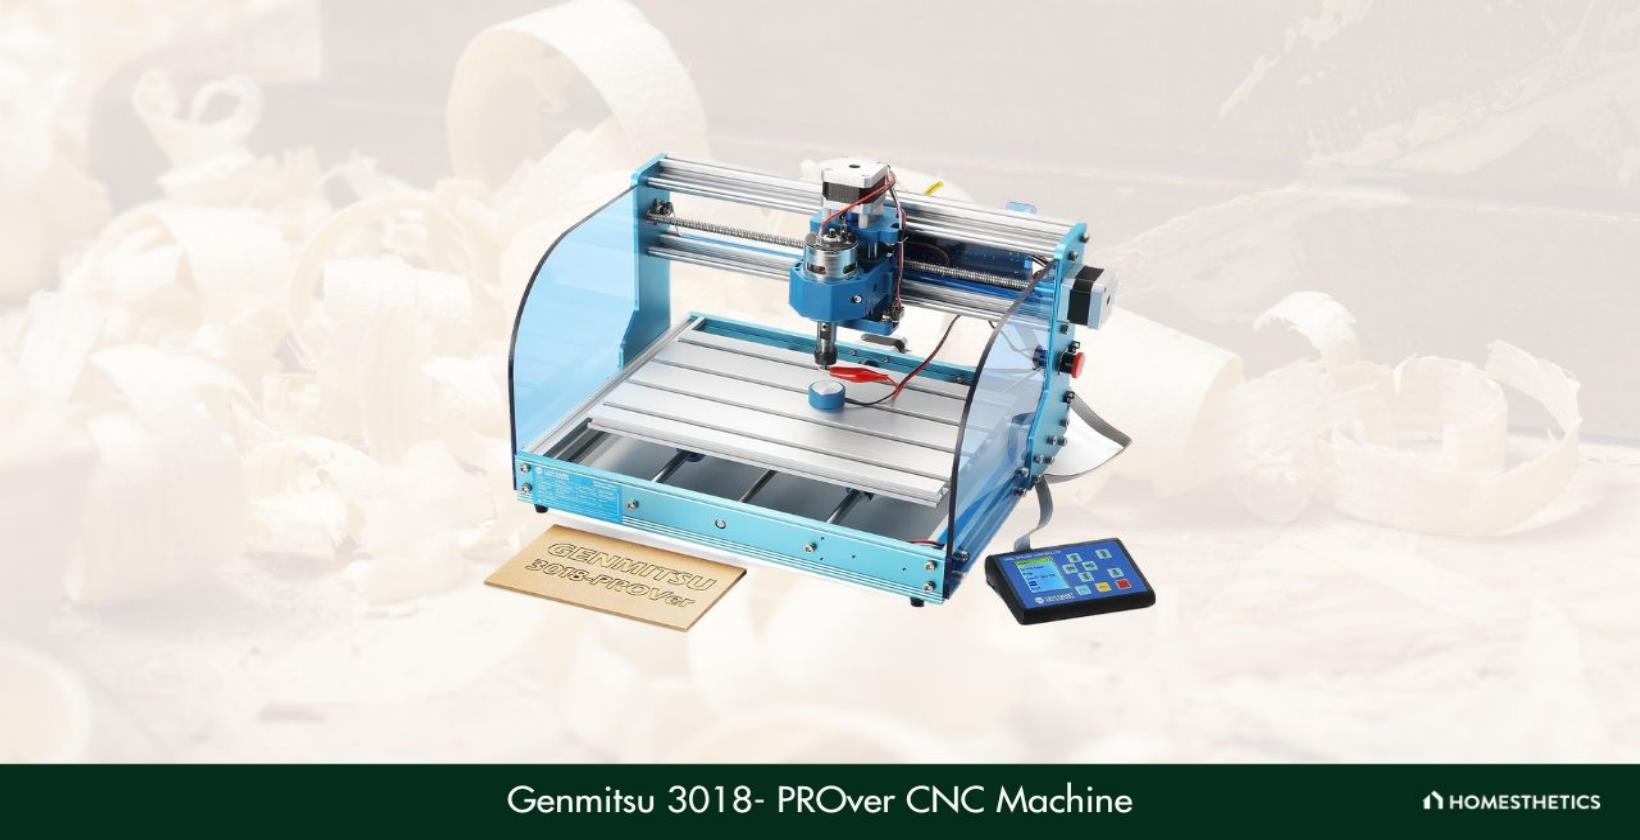 2. Genmitsu 3018 PROver CNC Machine